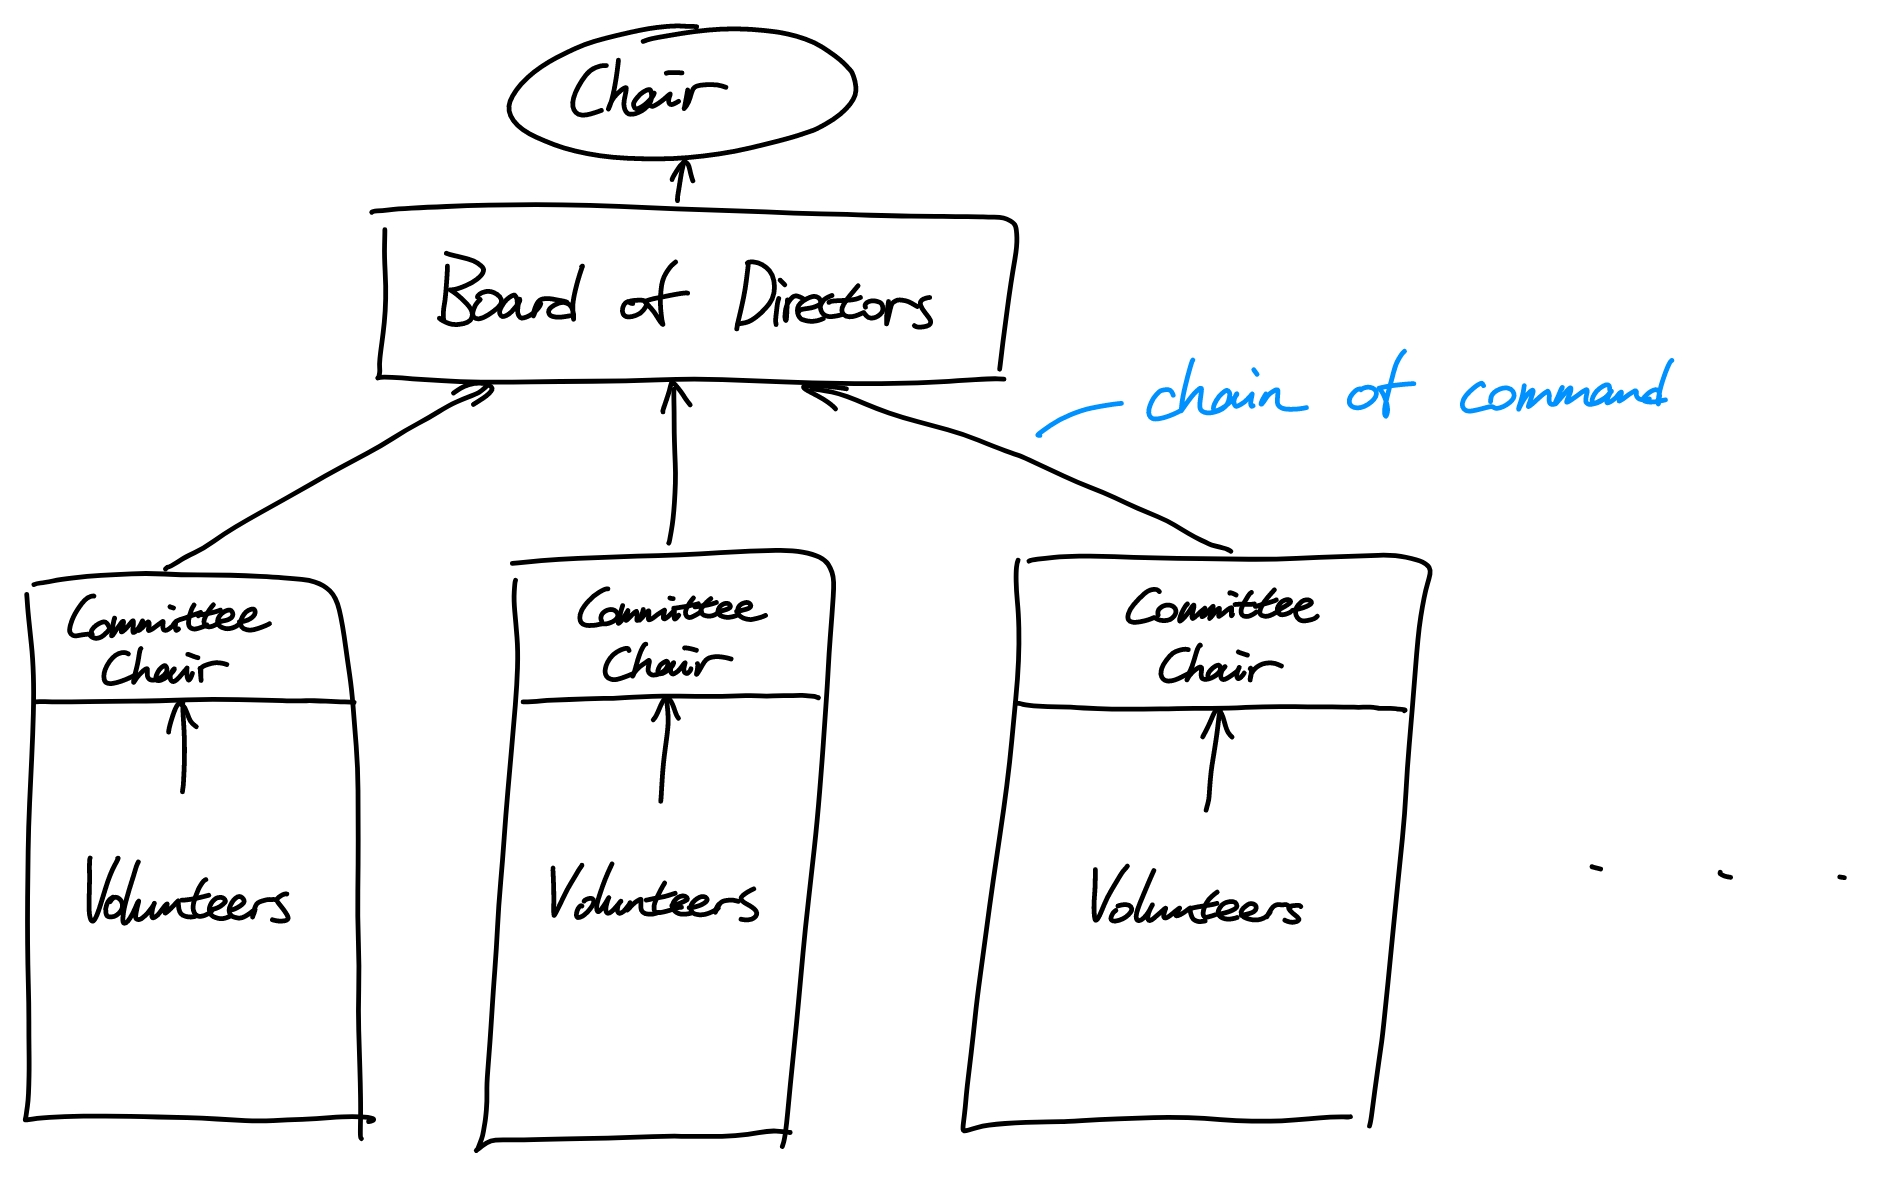 Current management structure diagram